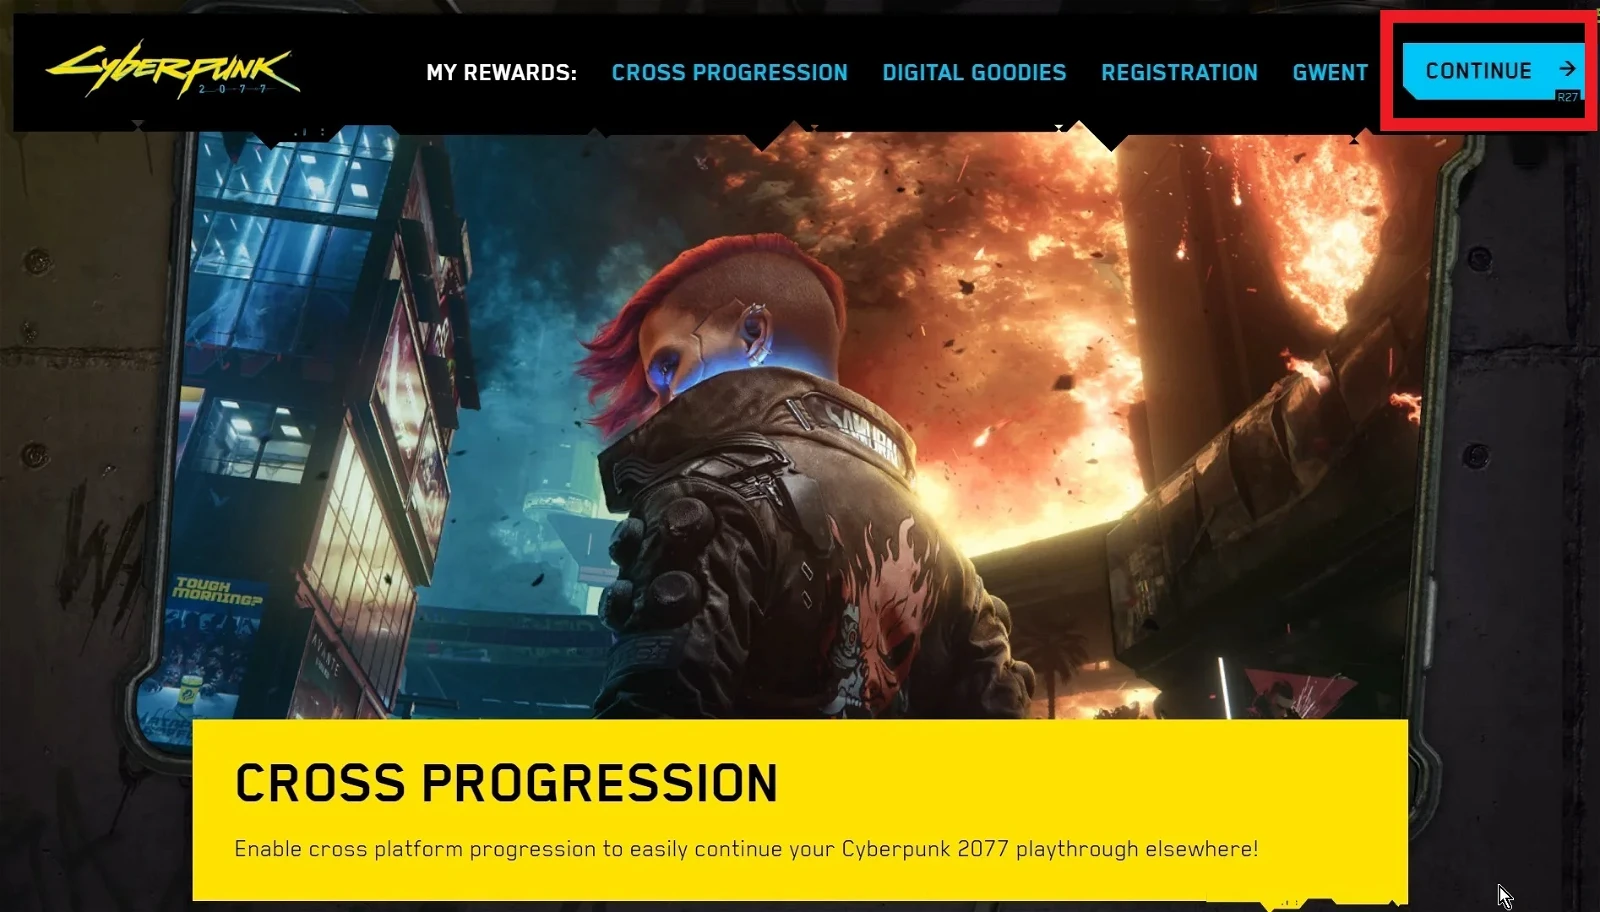 Cross-progression lets players take their Cyberpunk 2077 progress on the go.